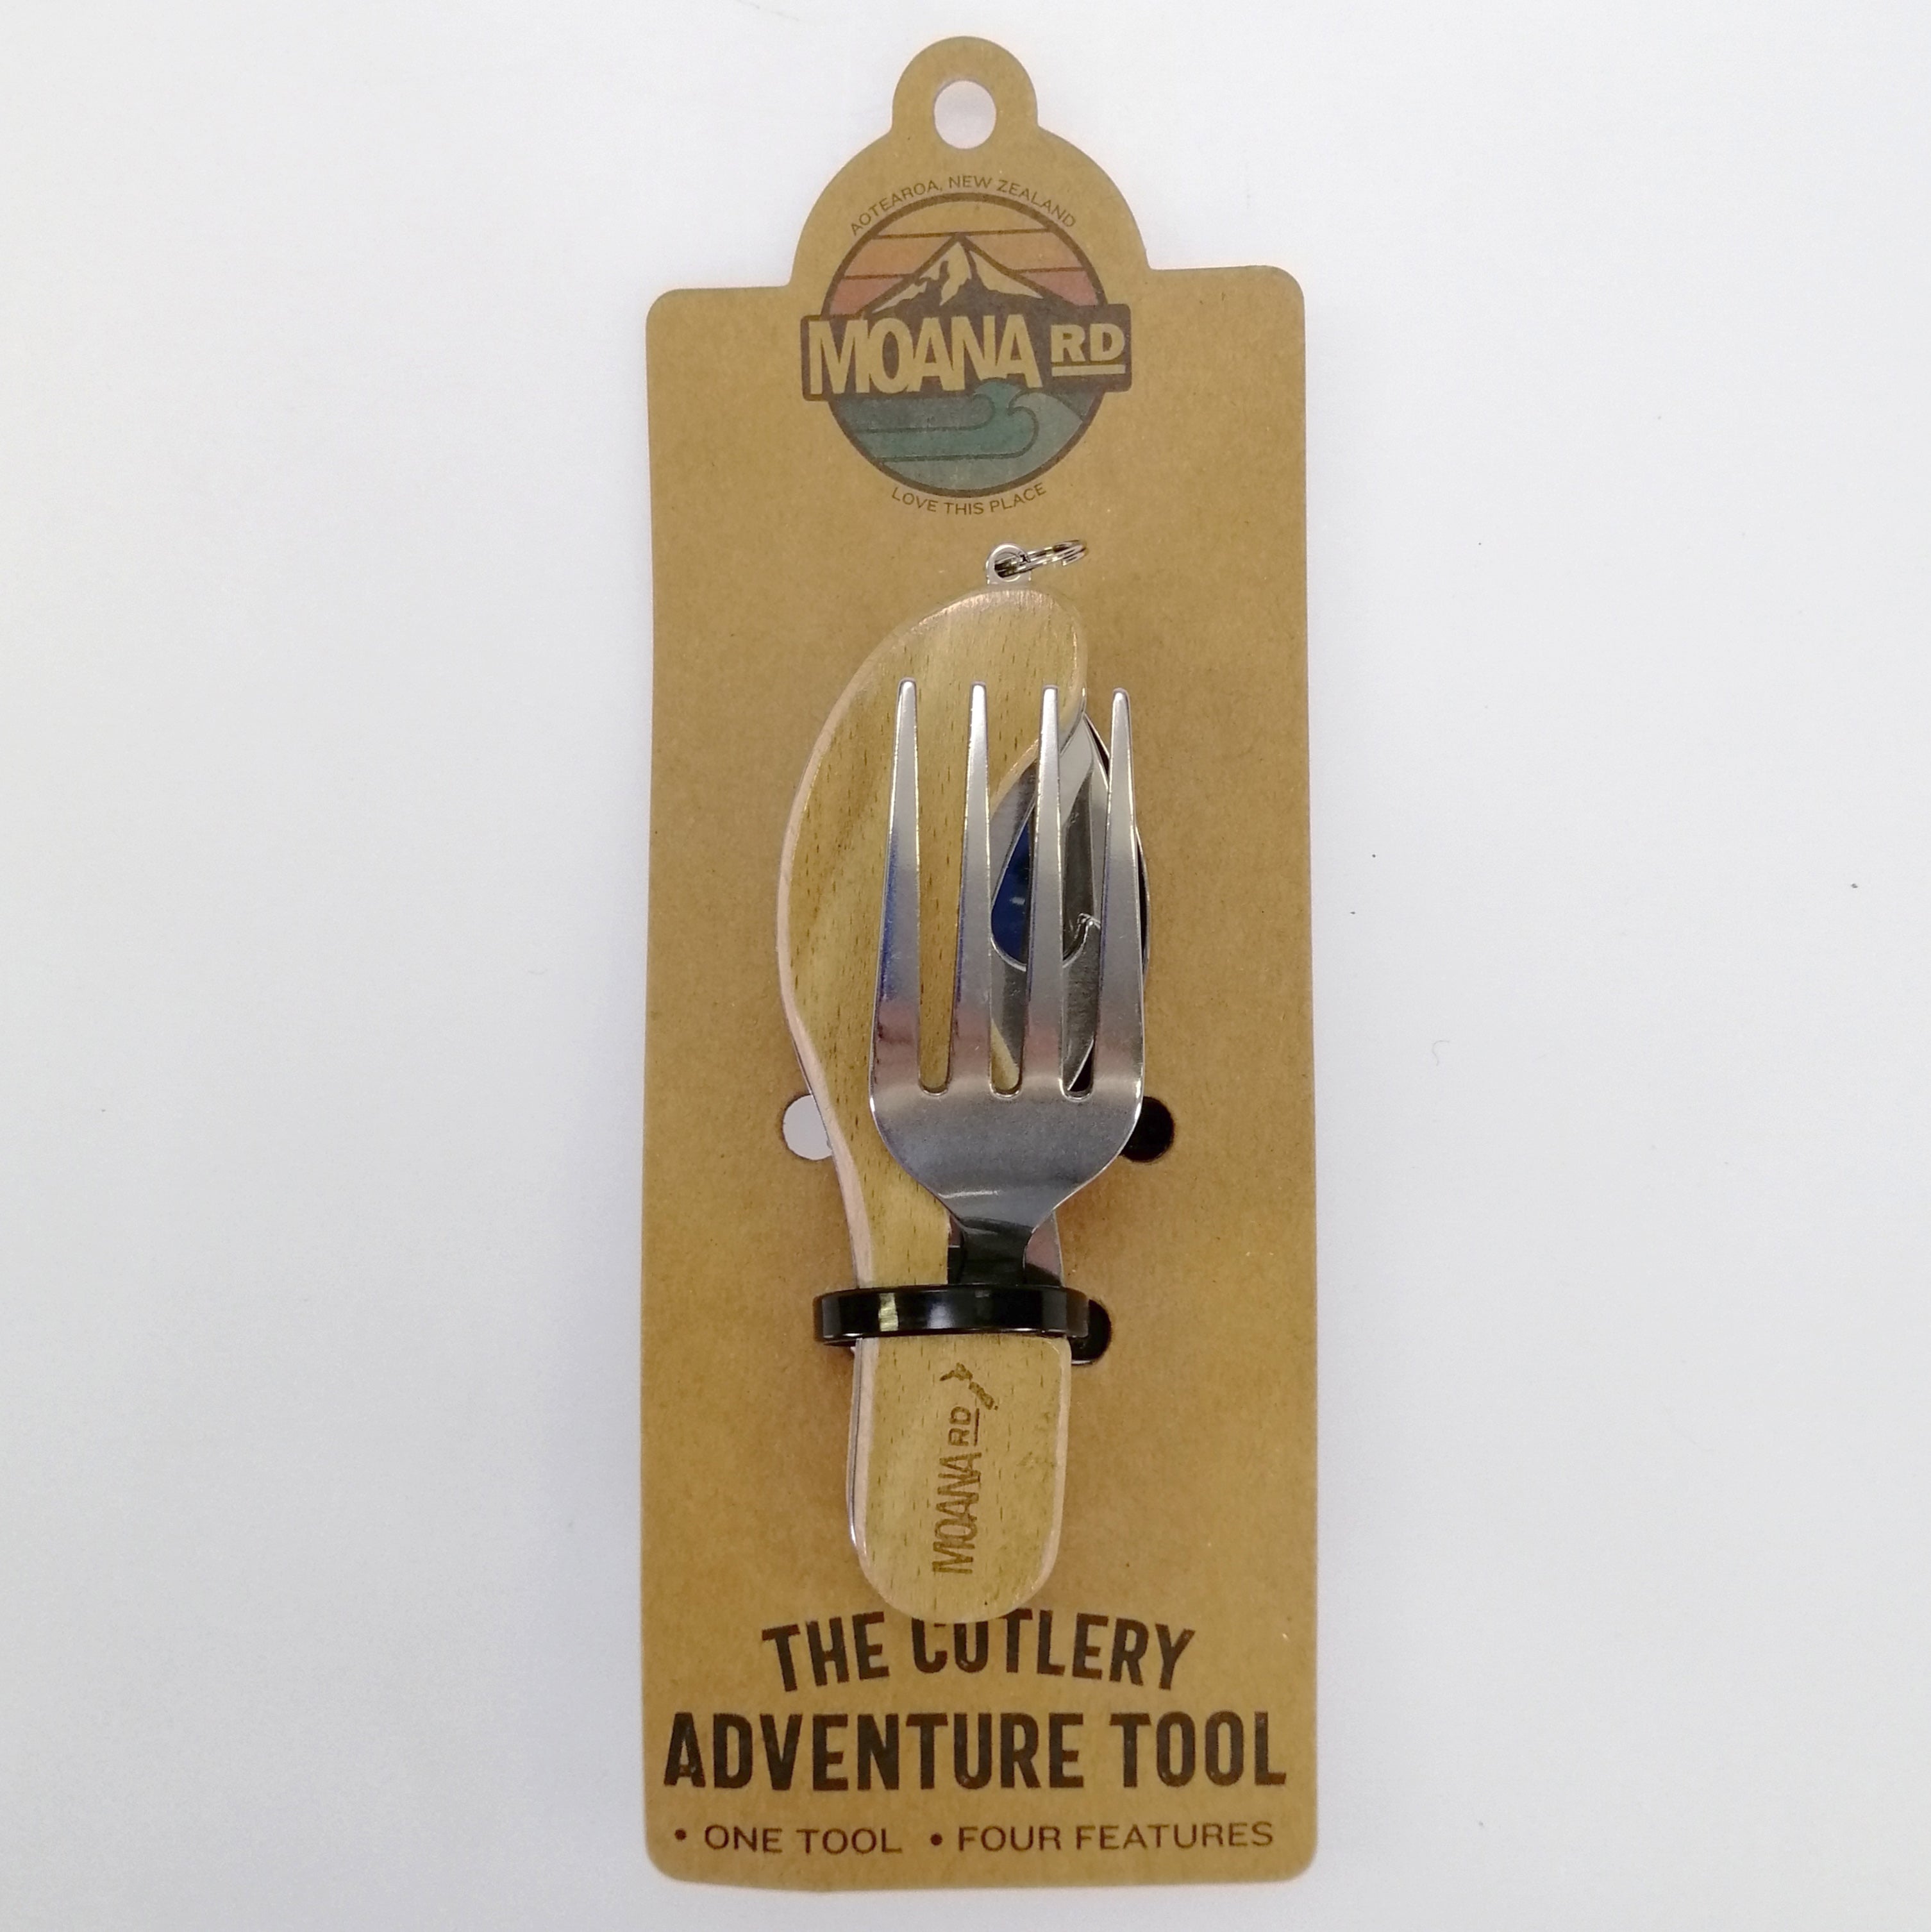 Moana Road - Adventure Tool - Cutlery Tool